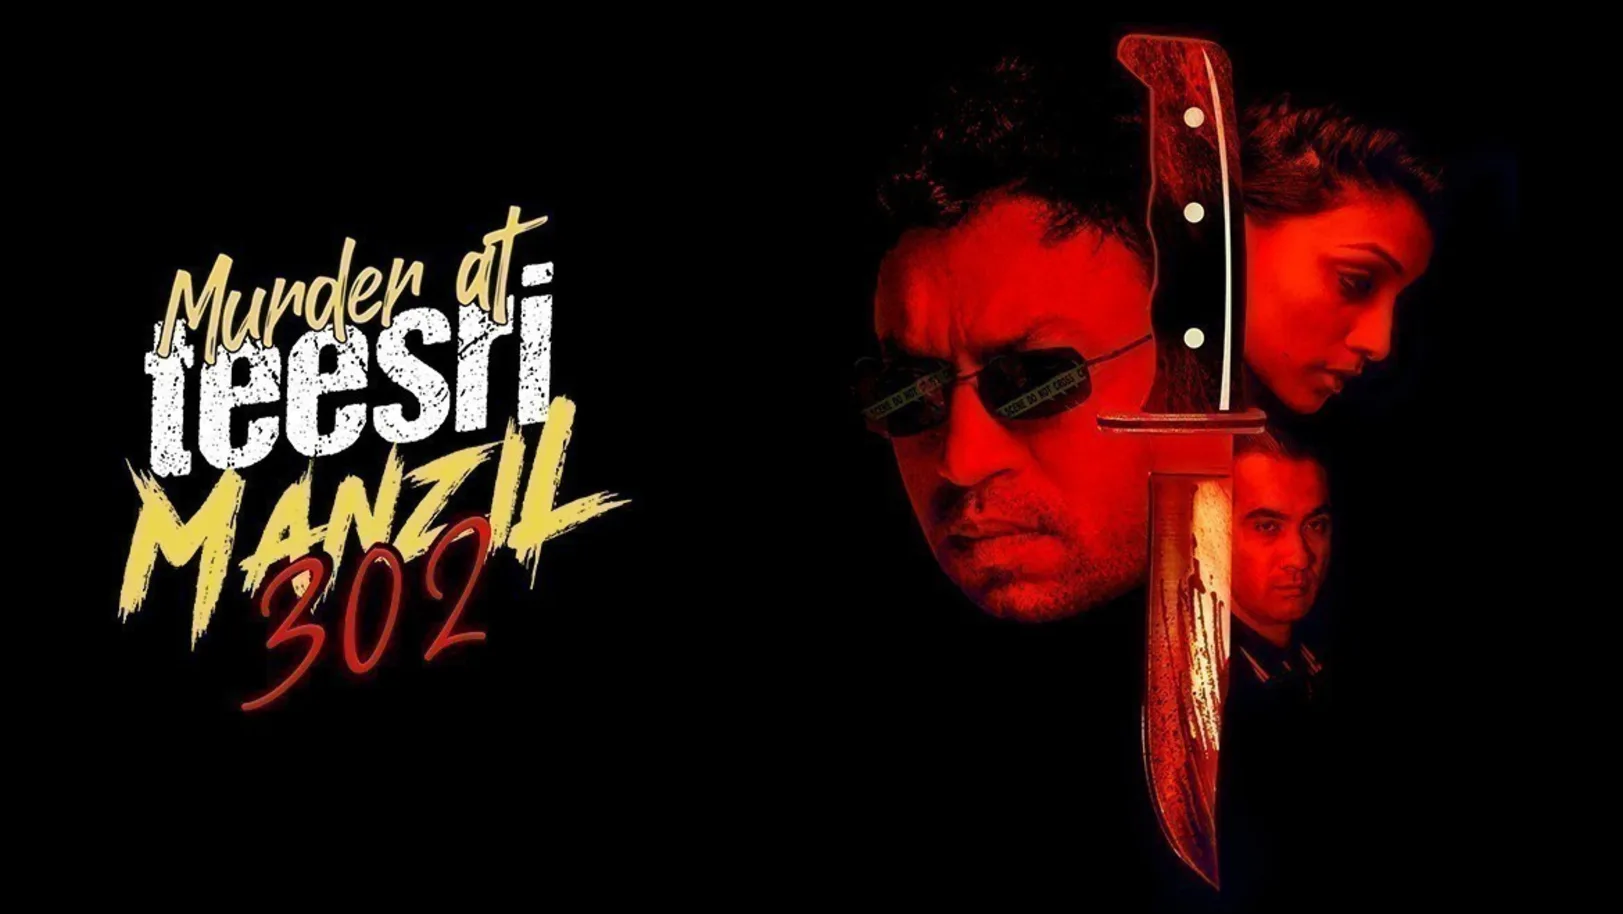 Murder At Teesri Manzil 302 Movie